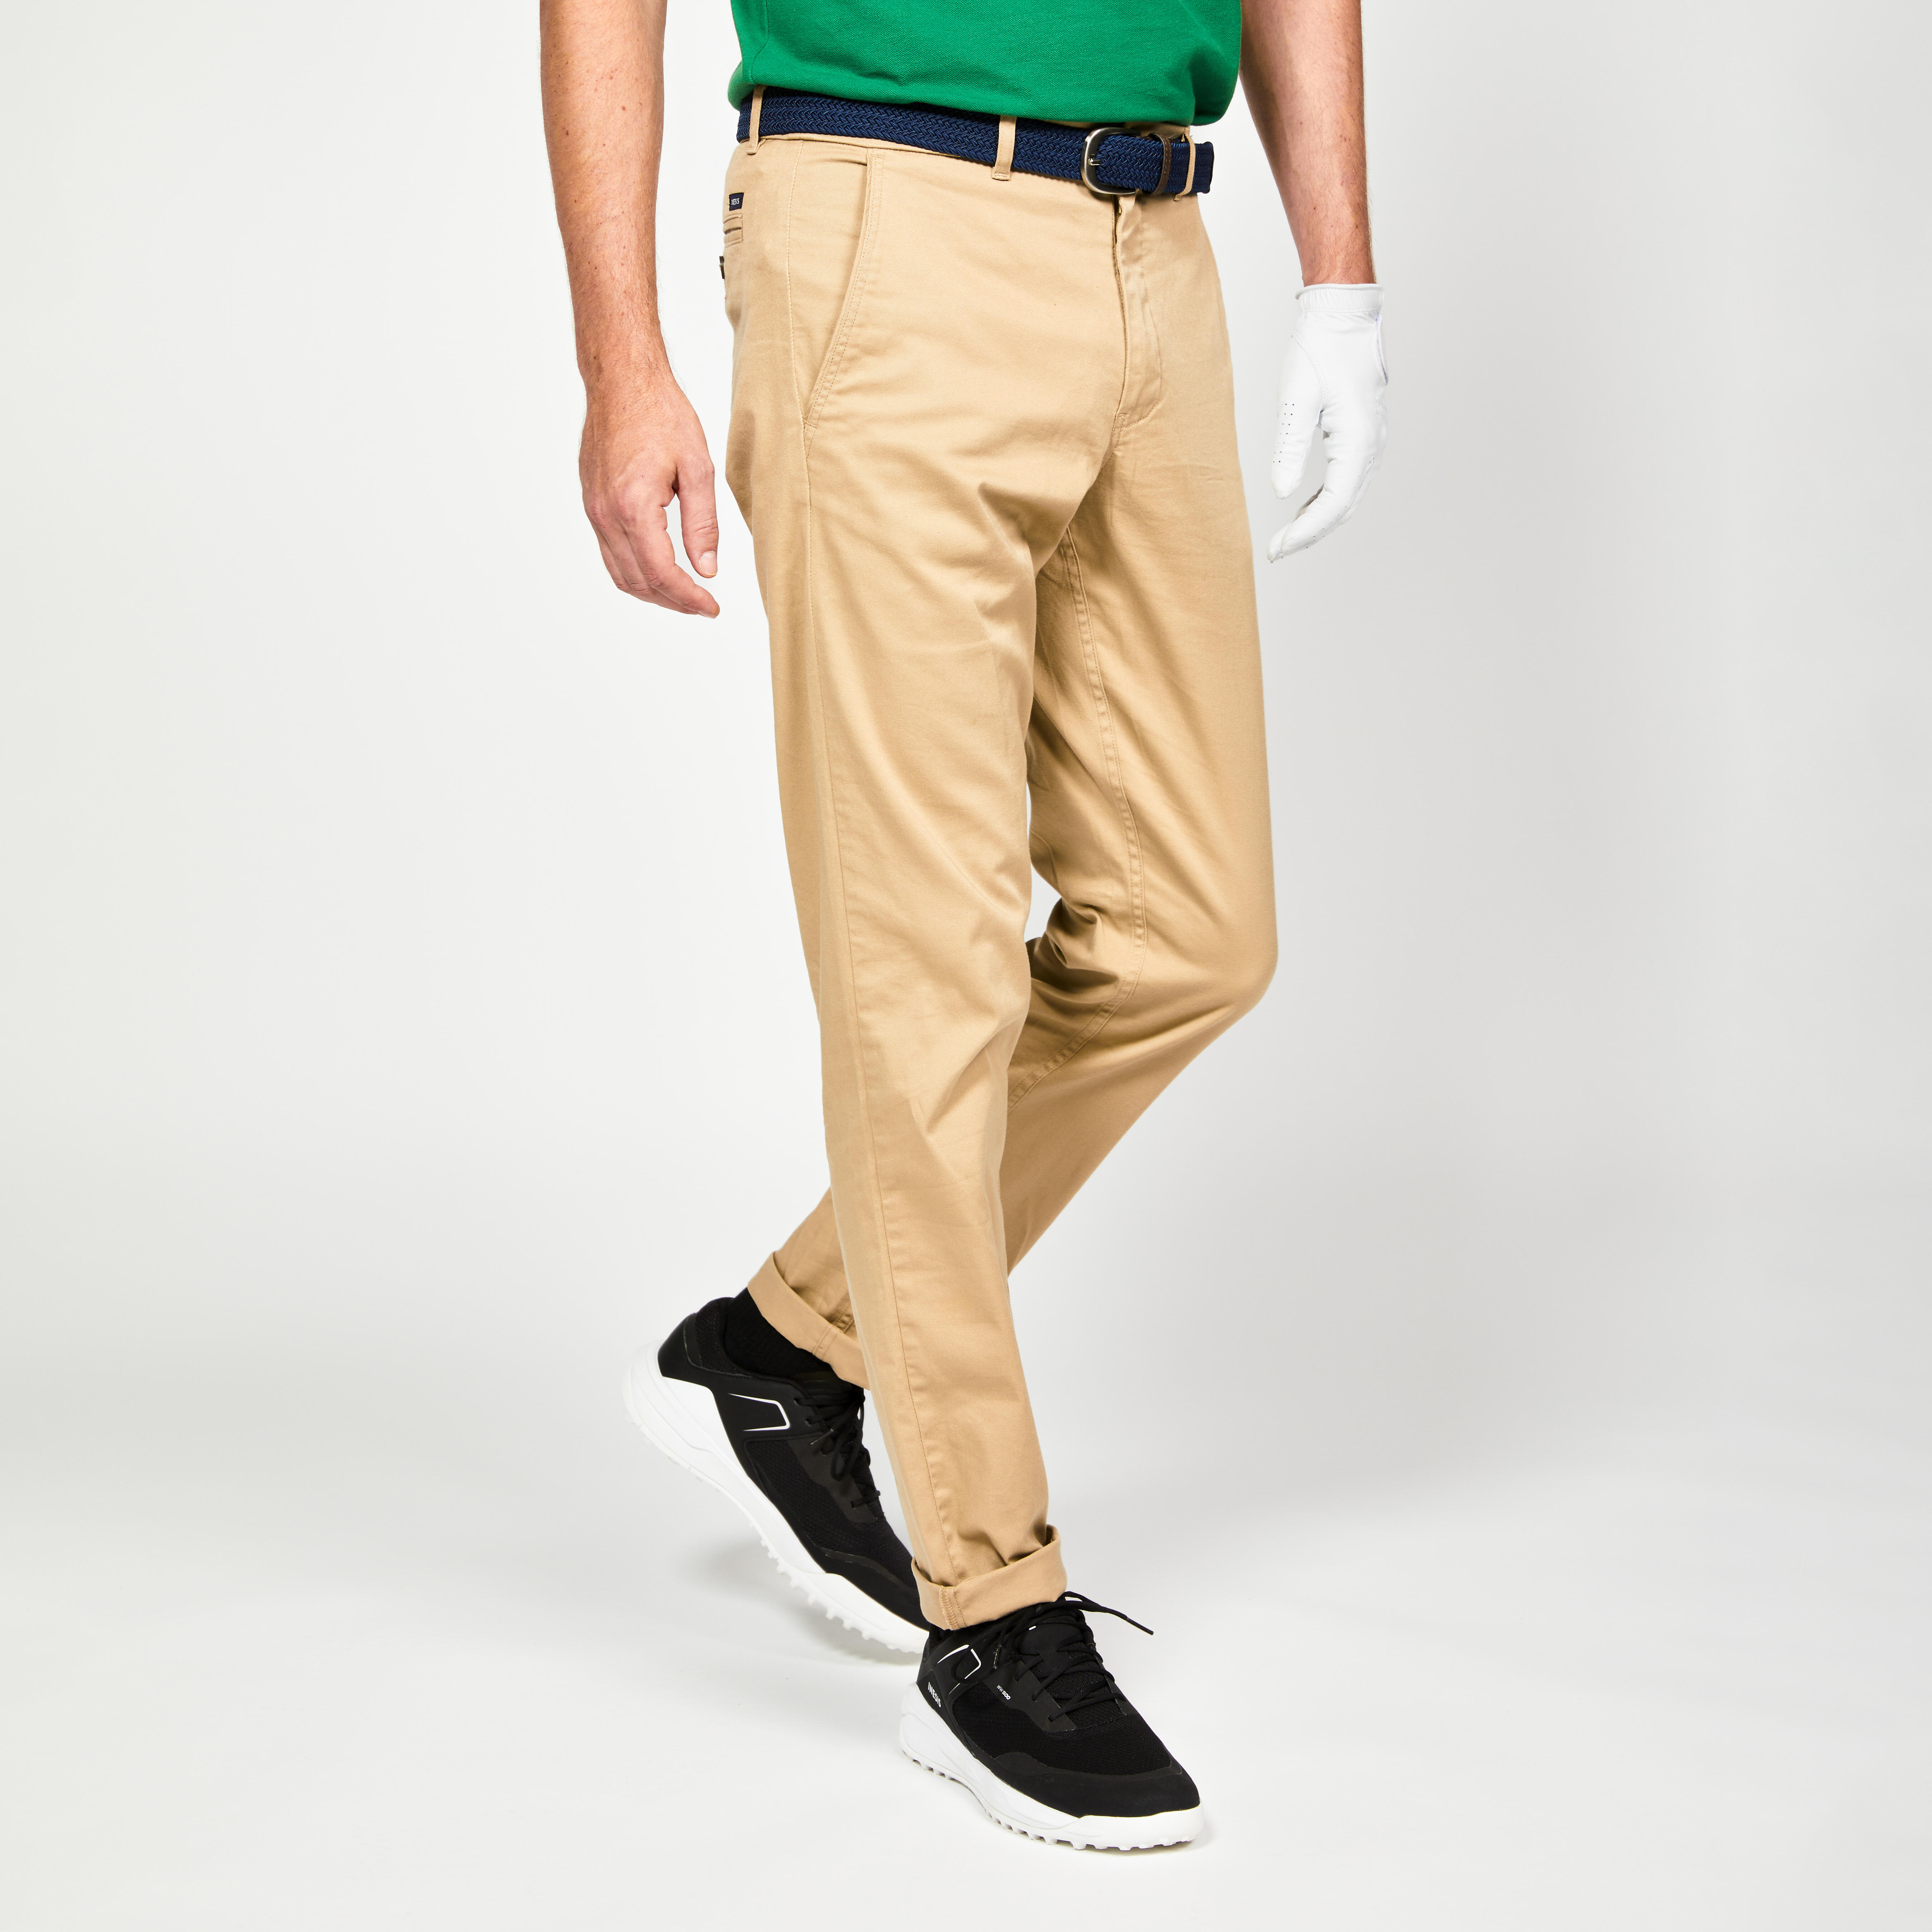 Cotton trousers Lulilli | 42 | K39800-1200_42